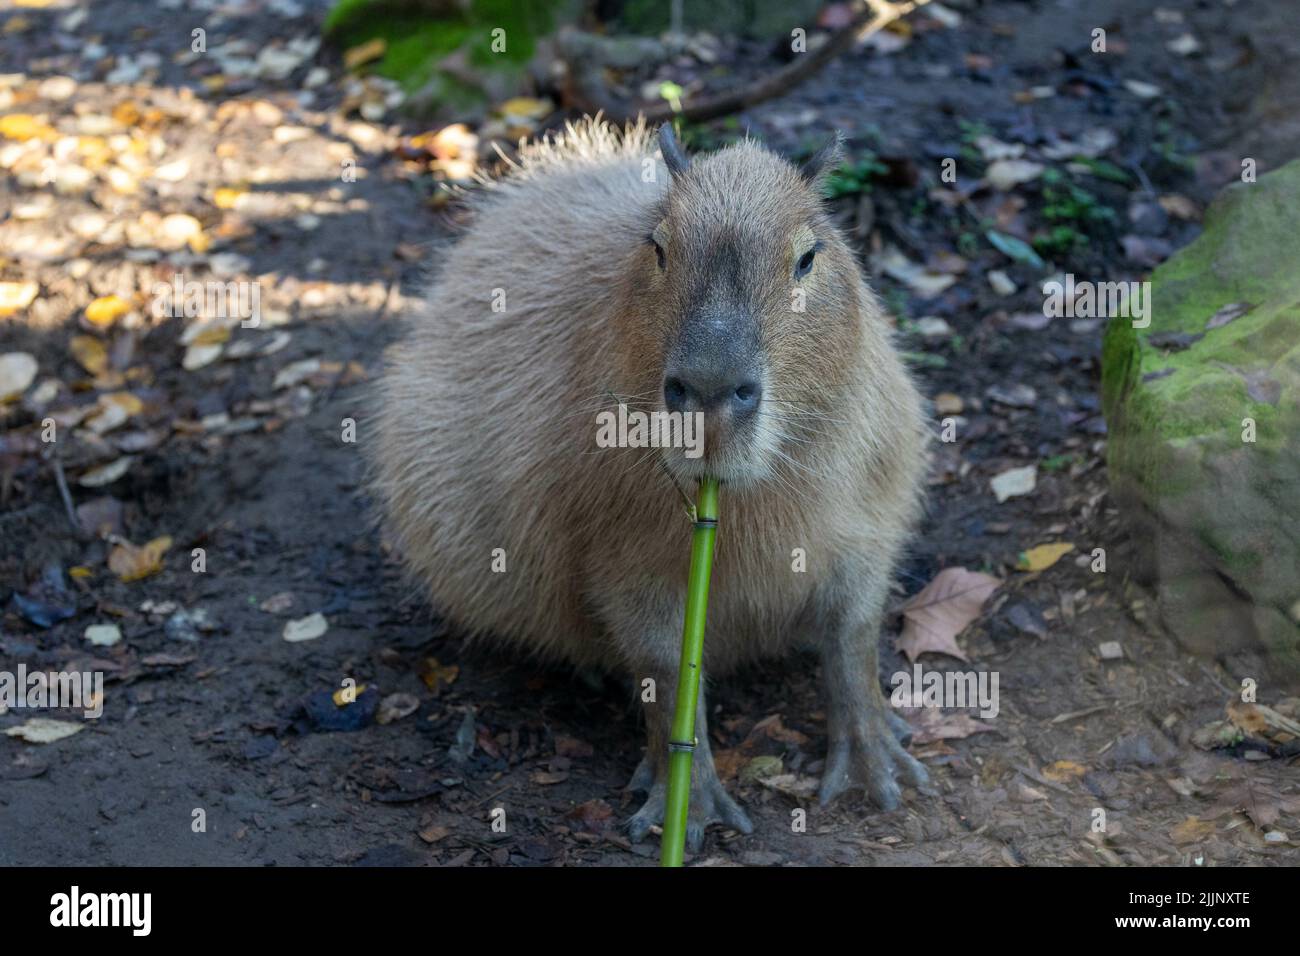 A closeup of a greater capybara chewing a plant stem, Hydrochoerus hydrochaeris. Sacramento Zoo, California. Stock Photo